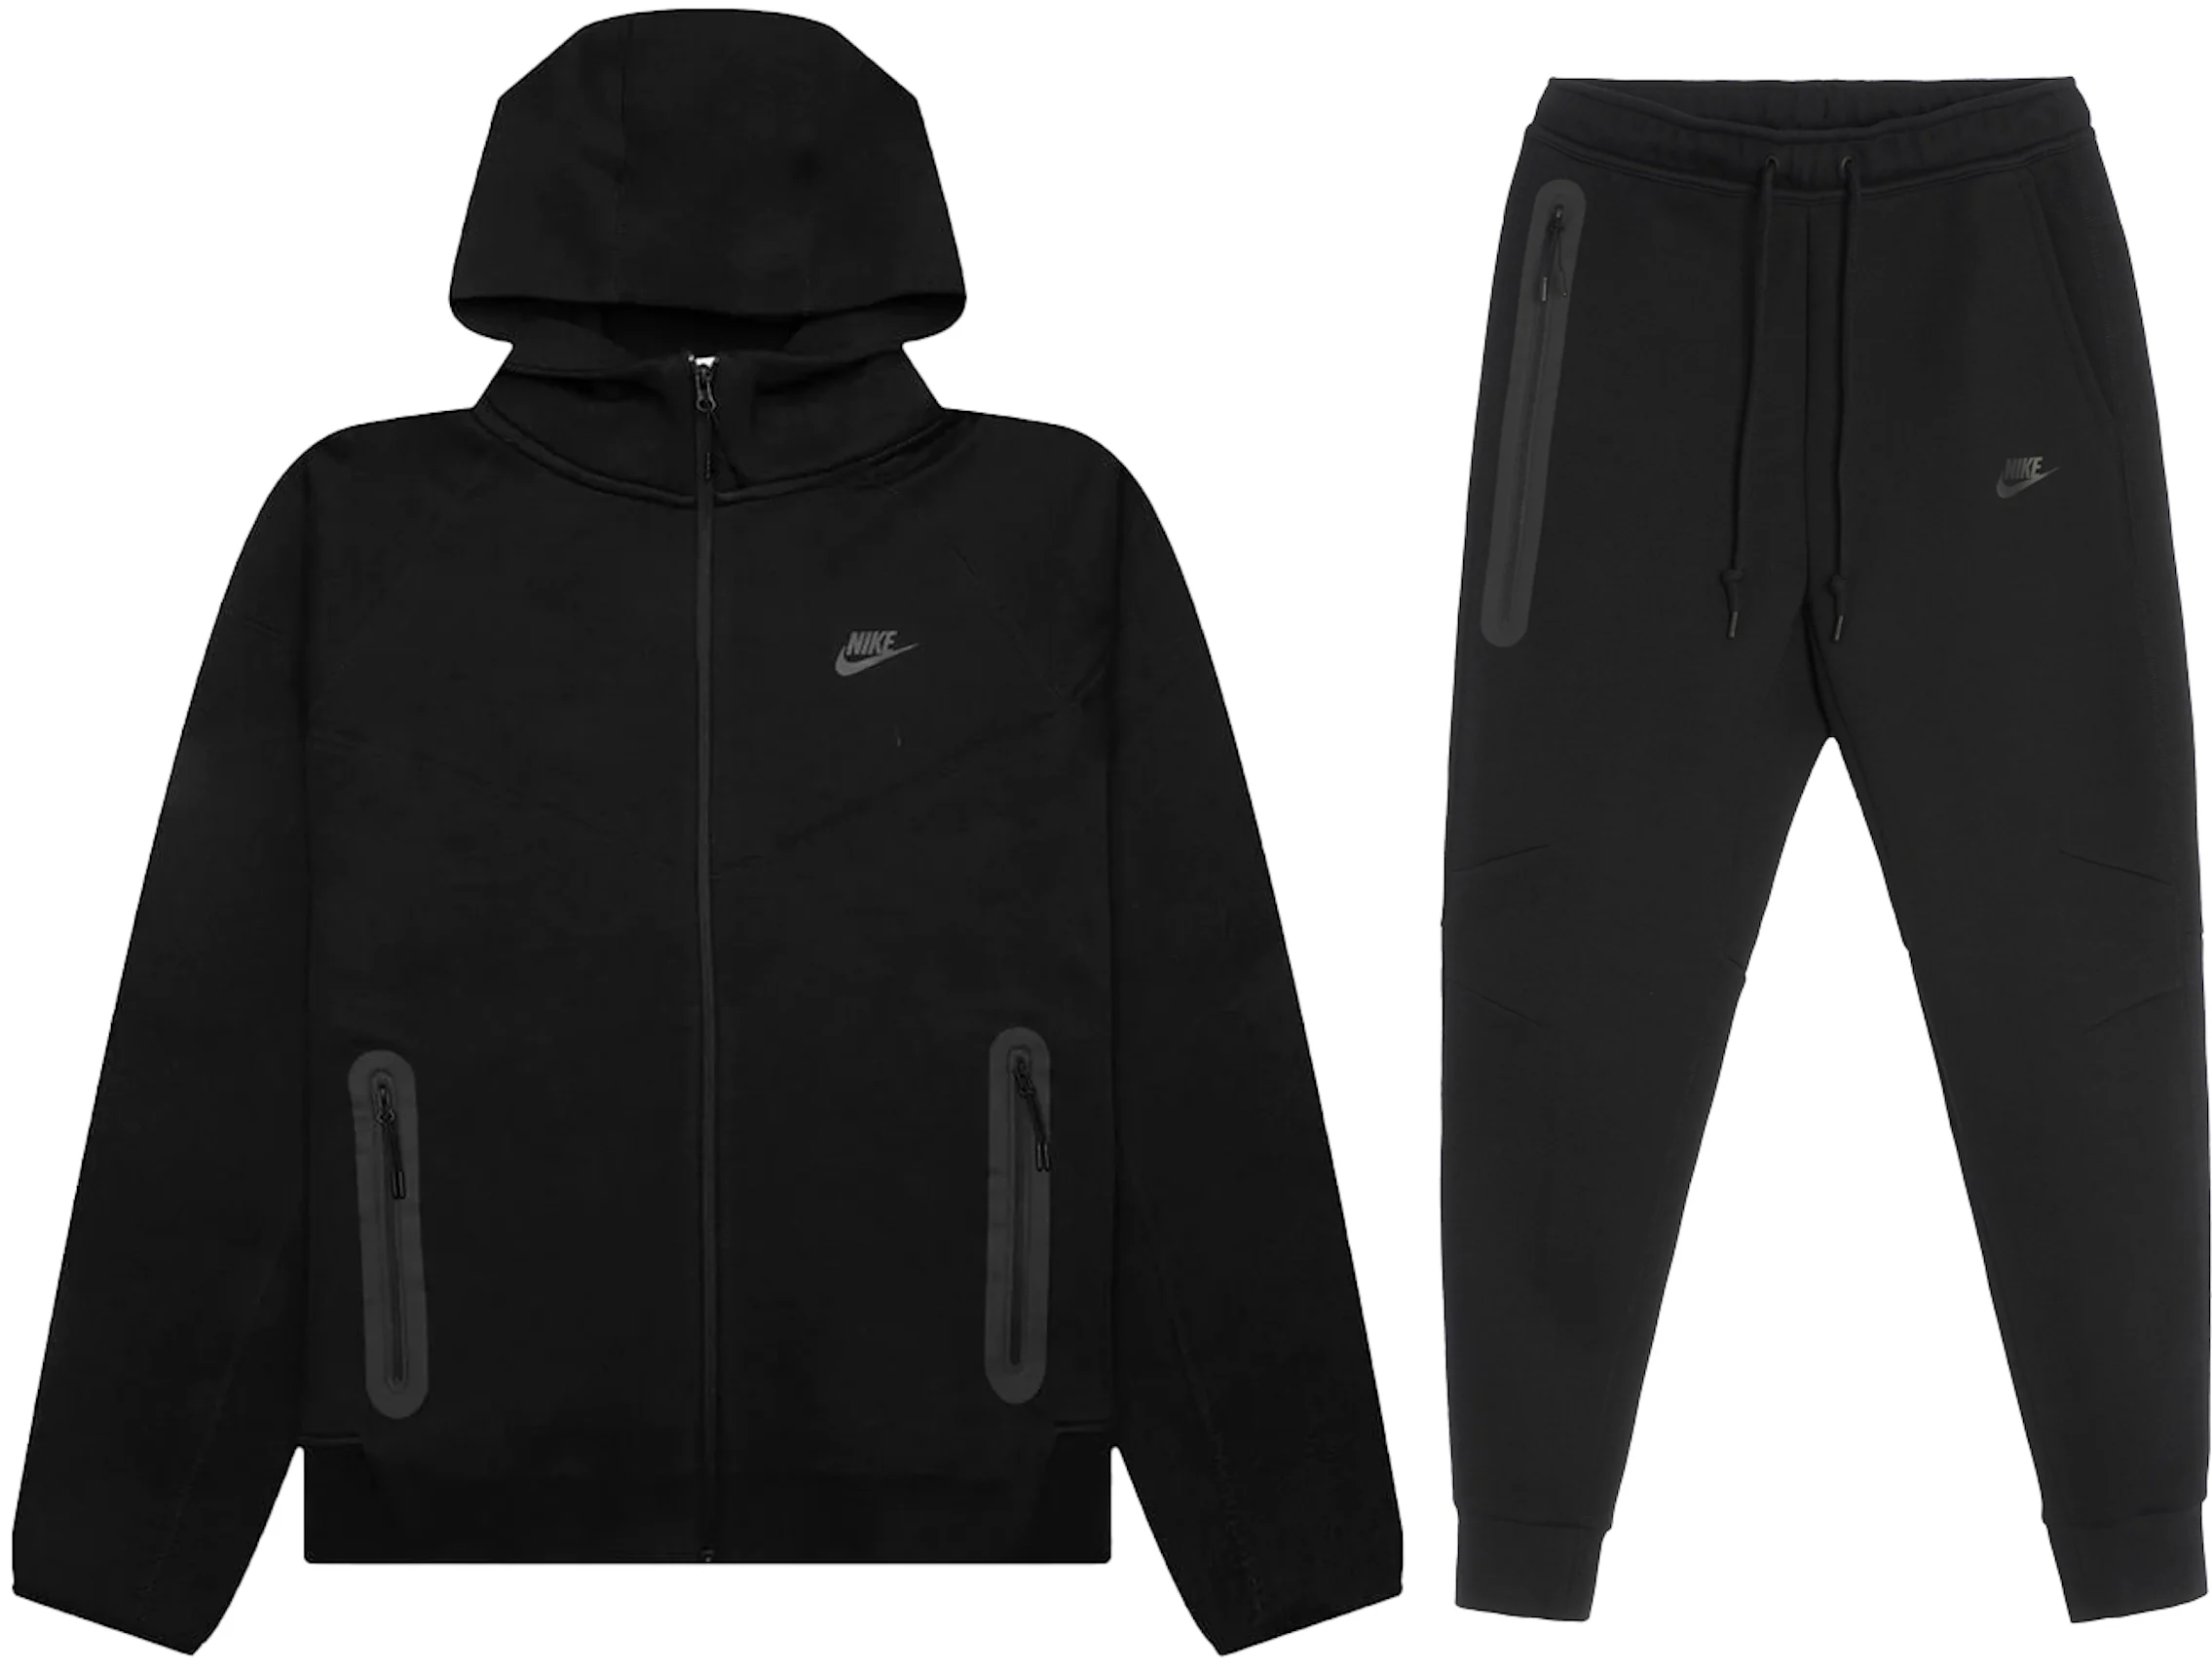 https://images.stockx.com/images/Nike-Sportswear-Tech-Fleece-Full-Zip-Hoodie-Joggers-Set-Black-Black.jpg?fit=fill&bg=FFFFFF&w=1200&h=857&fm=webp&auto=compress&dpr=2&trim=color&updated_at=1694532792&q=60